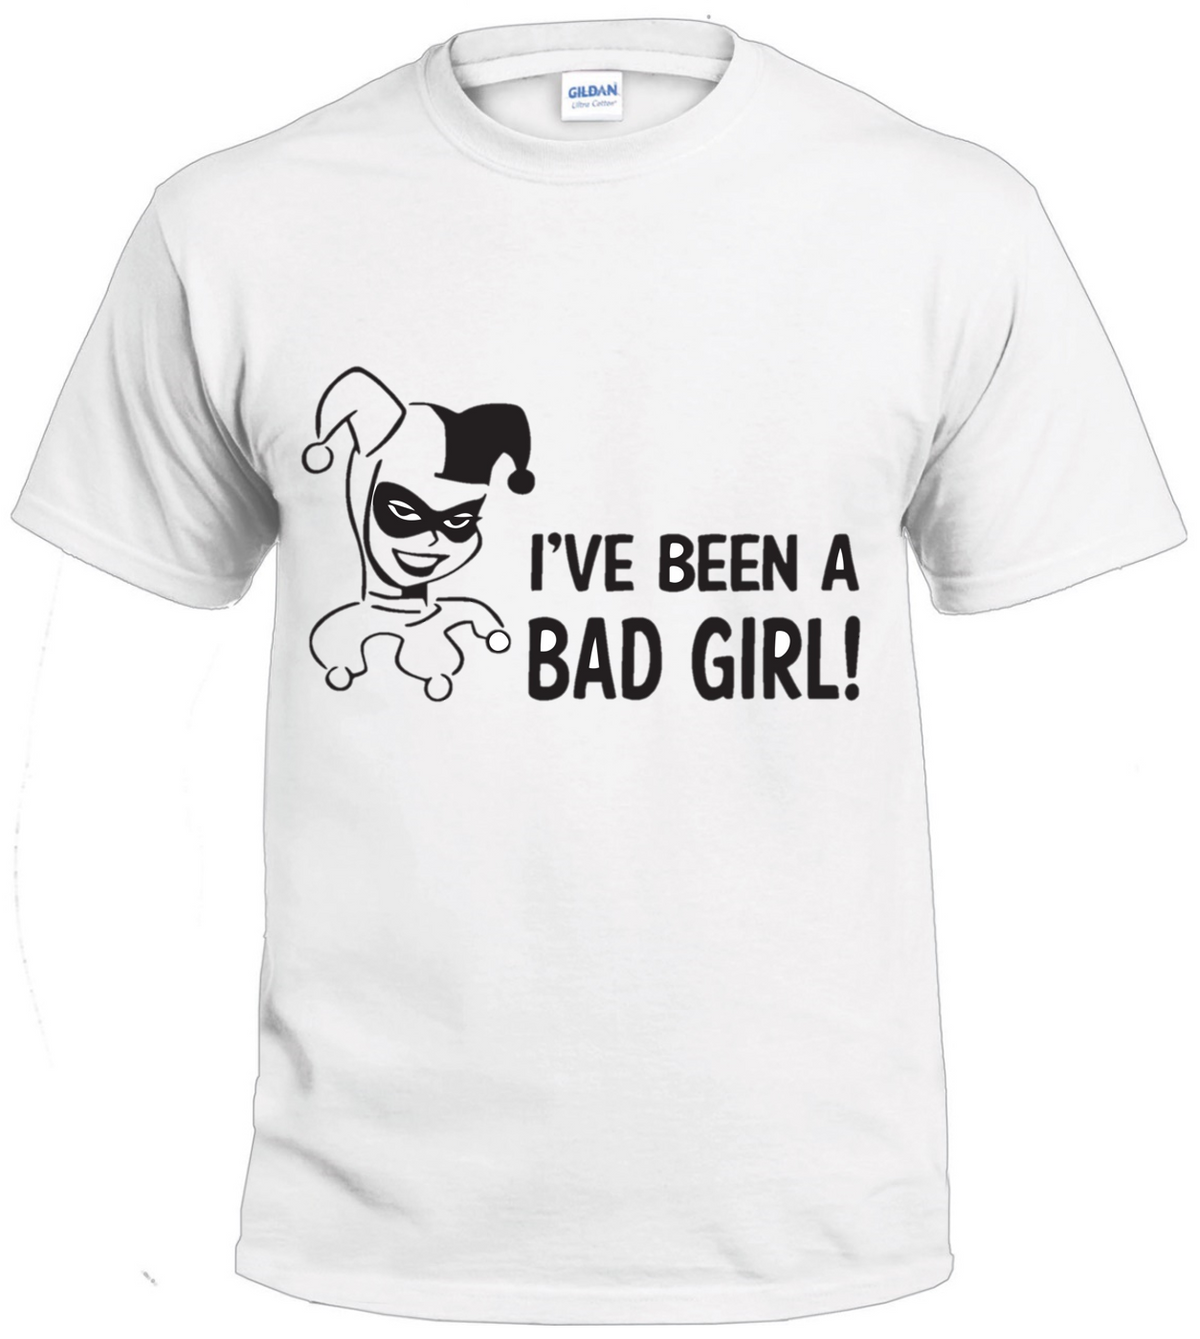 I've Been a Bad Girl t-shirt